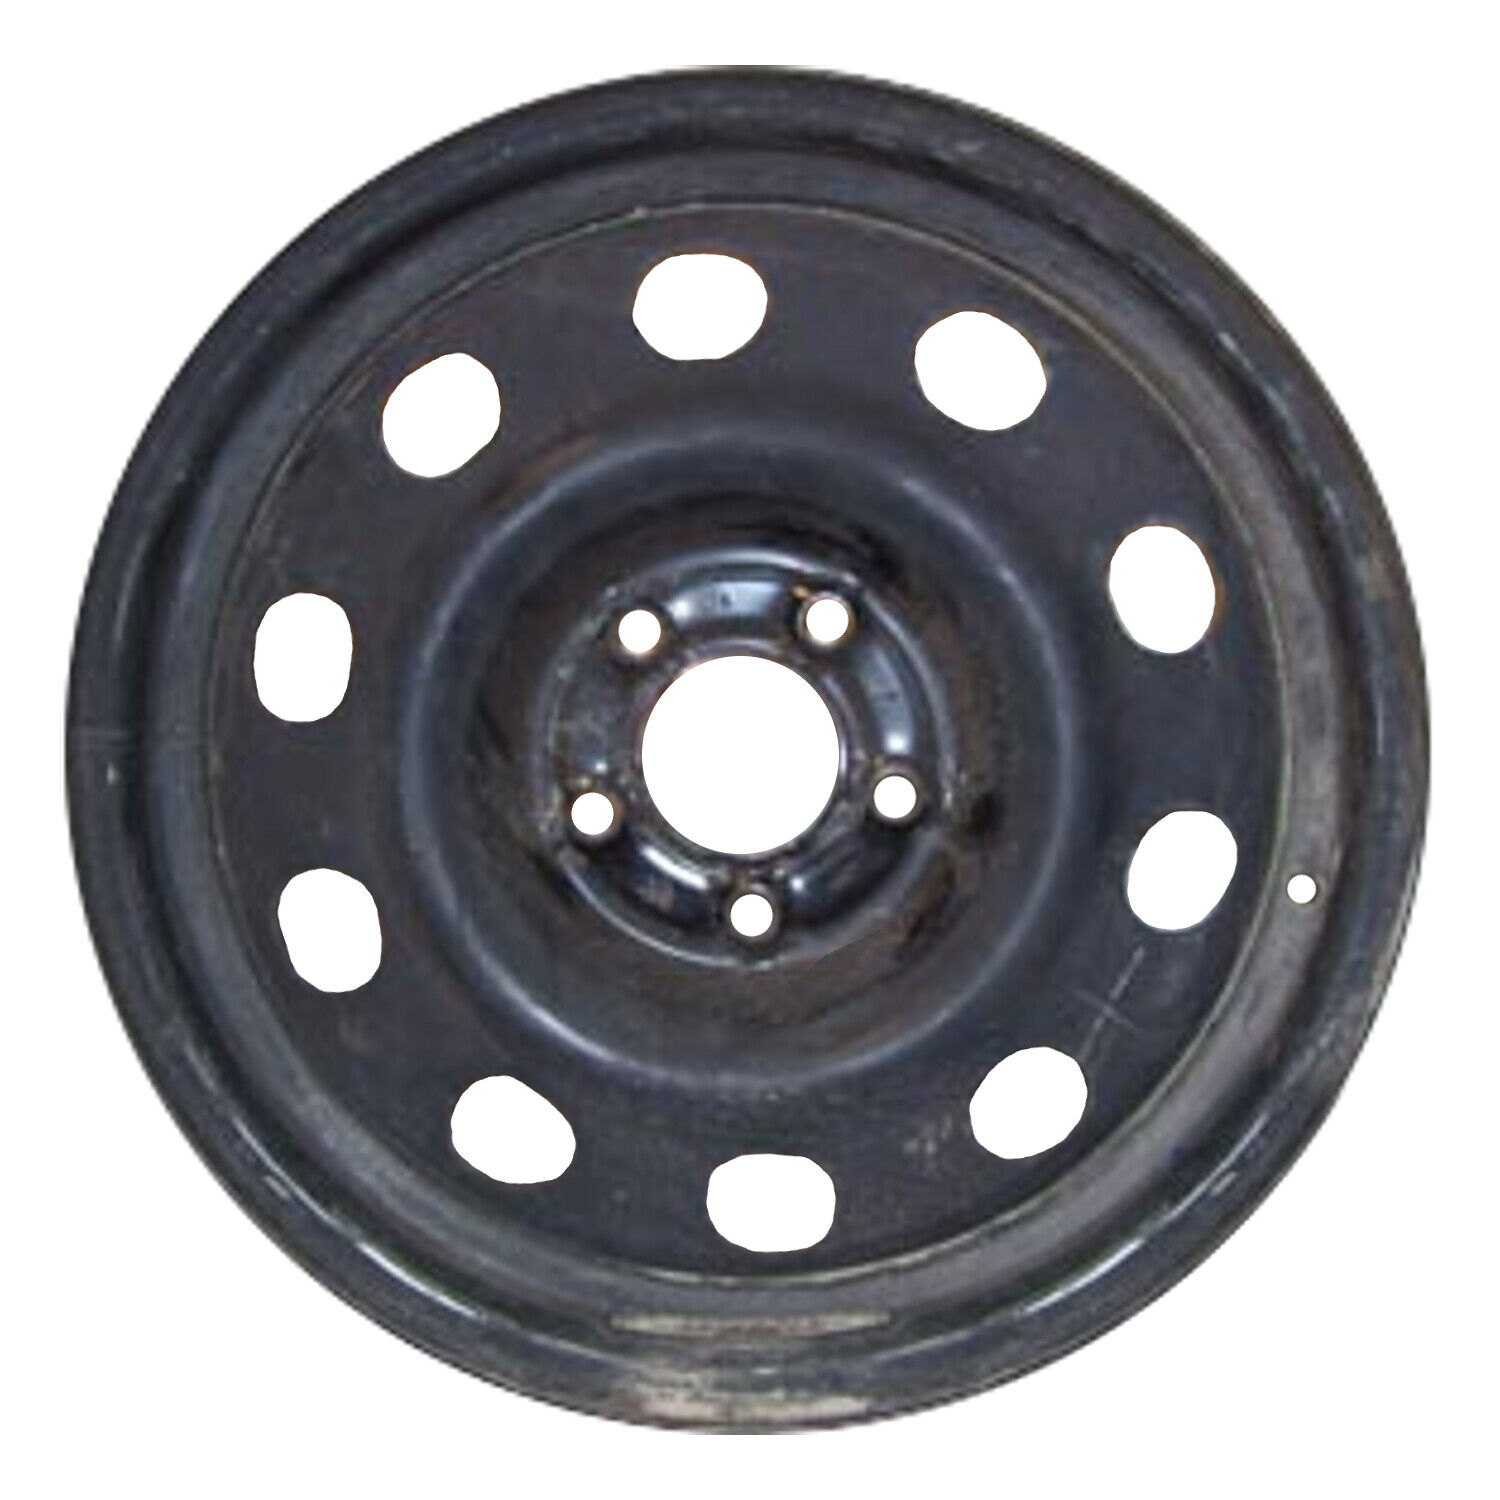 03670 Reconditioned OEM 17x7.5 Black Steel Wheel fits 2006-2011 Crown Victoria